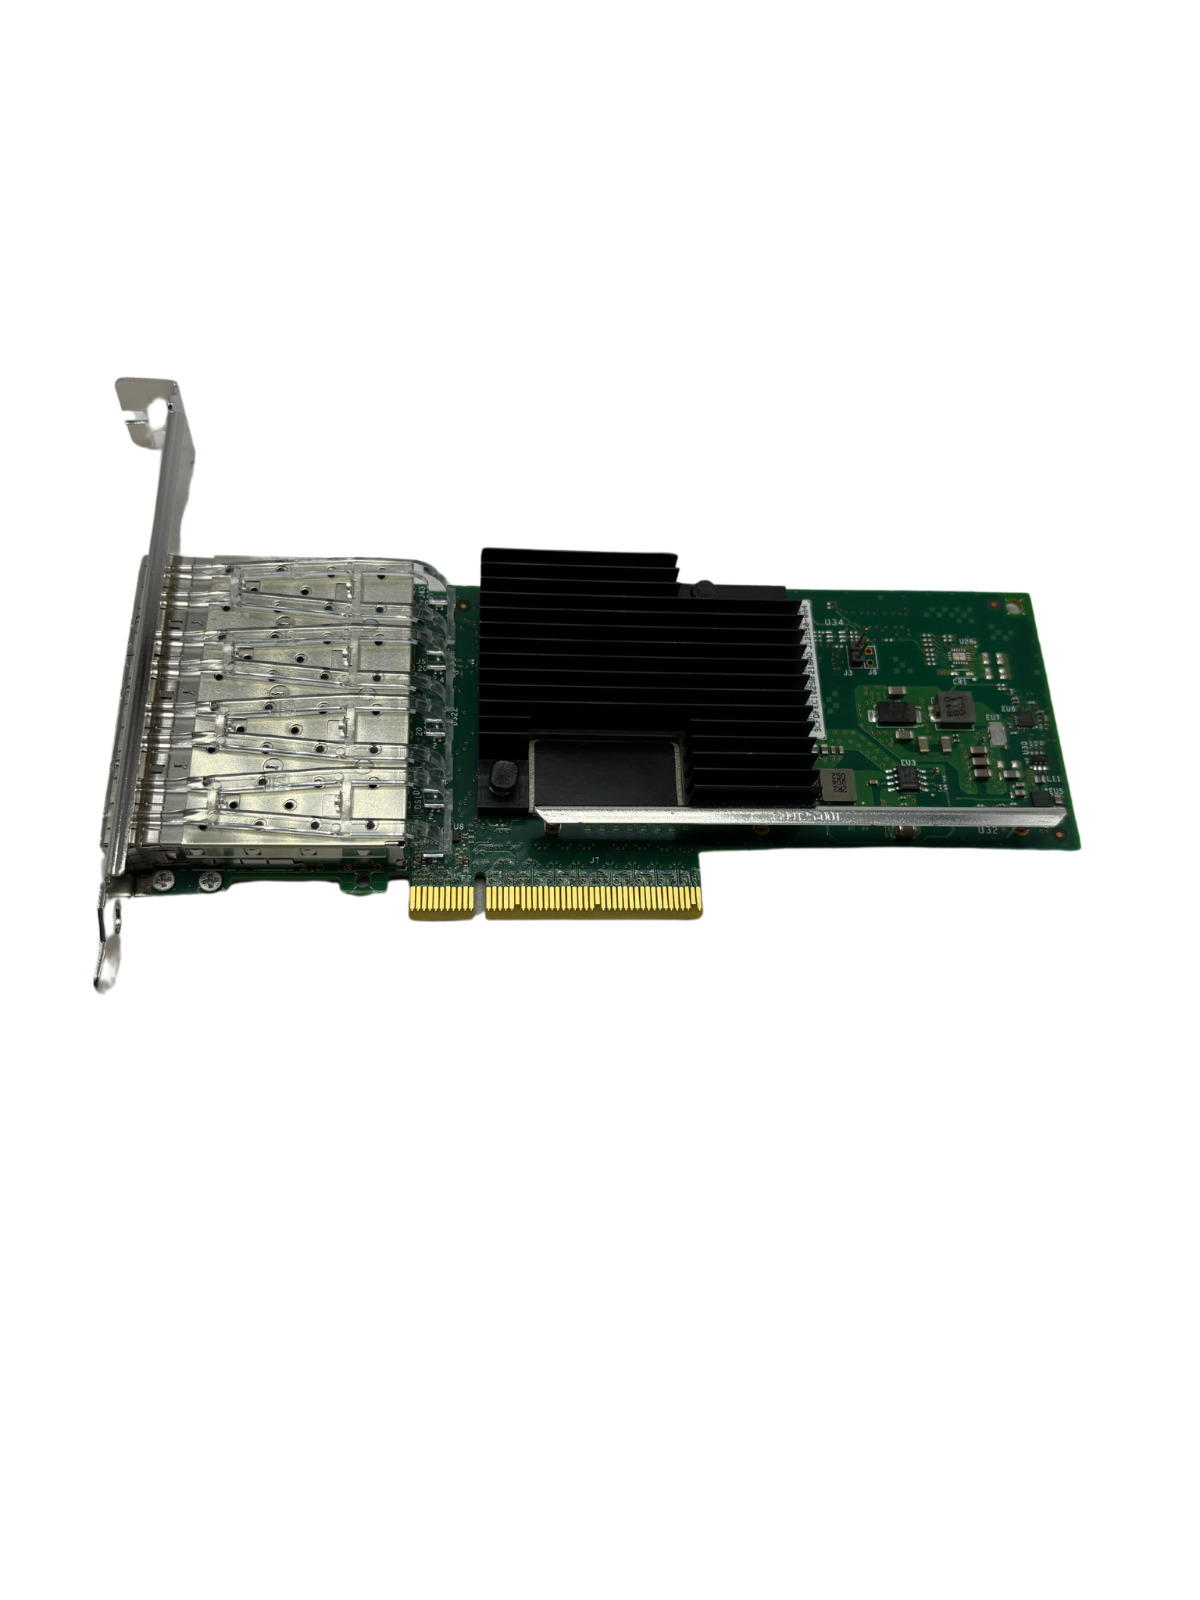 Cisco UCSC-PCIE-IQ10GF X710-DA4 10GB SFP+ Nic Adapter Card 30-100131-01